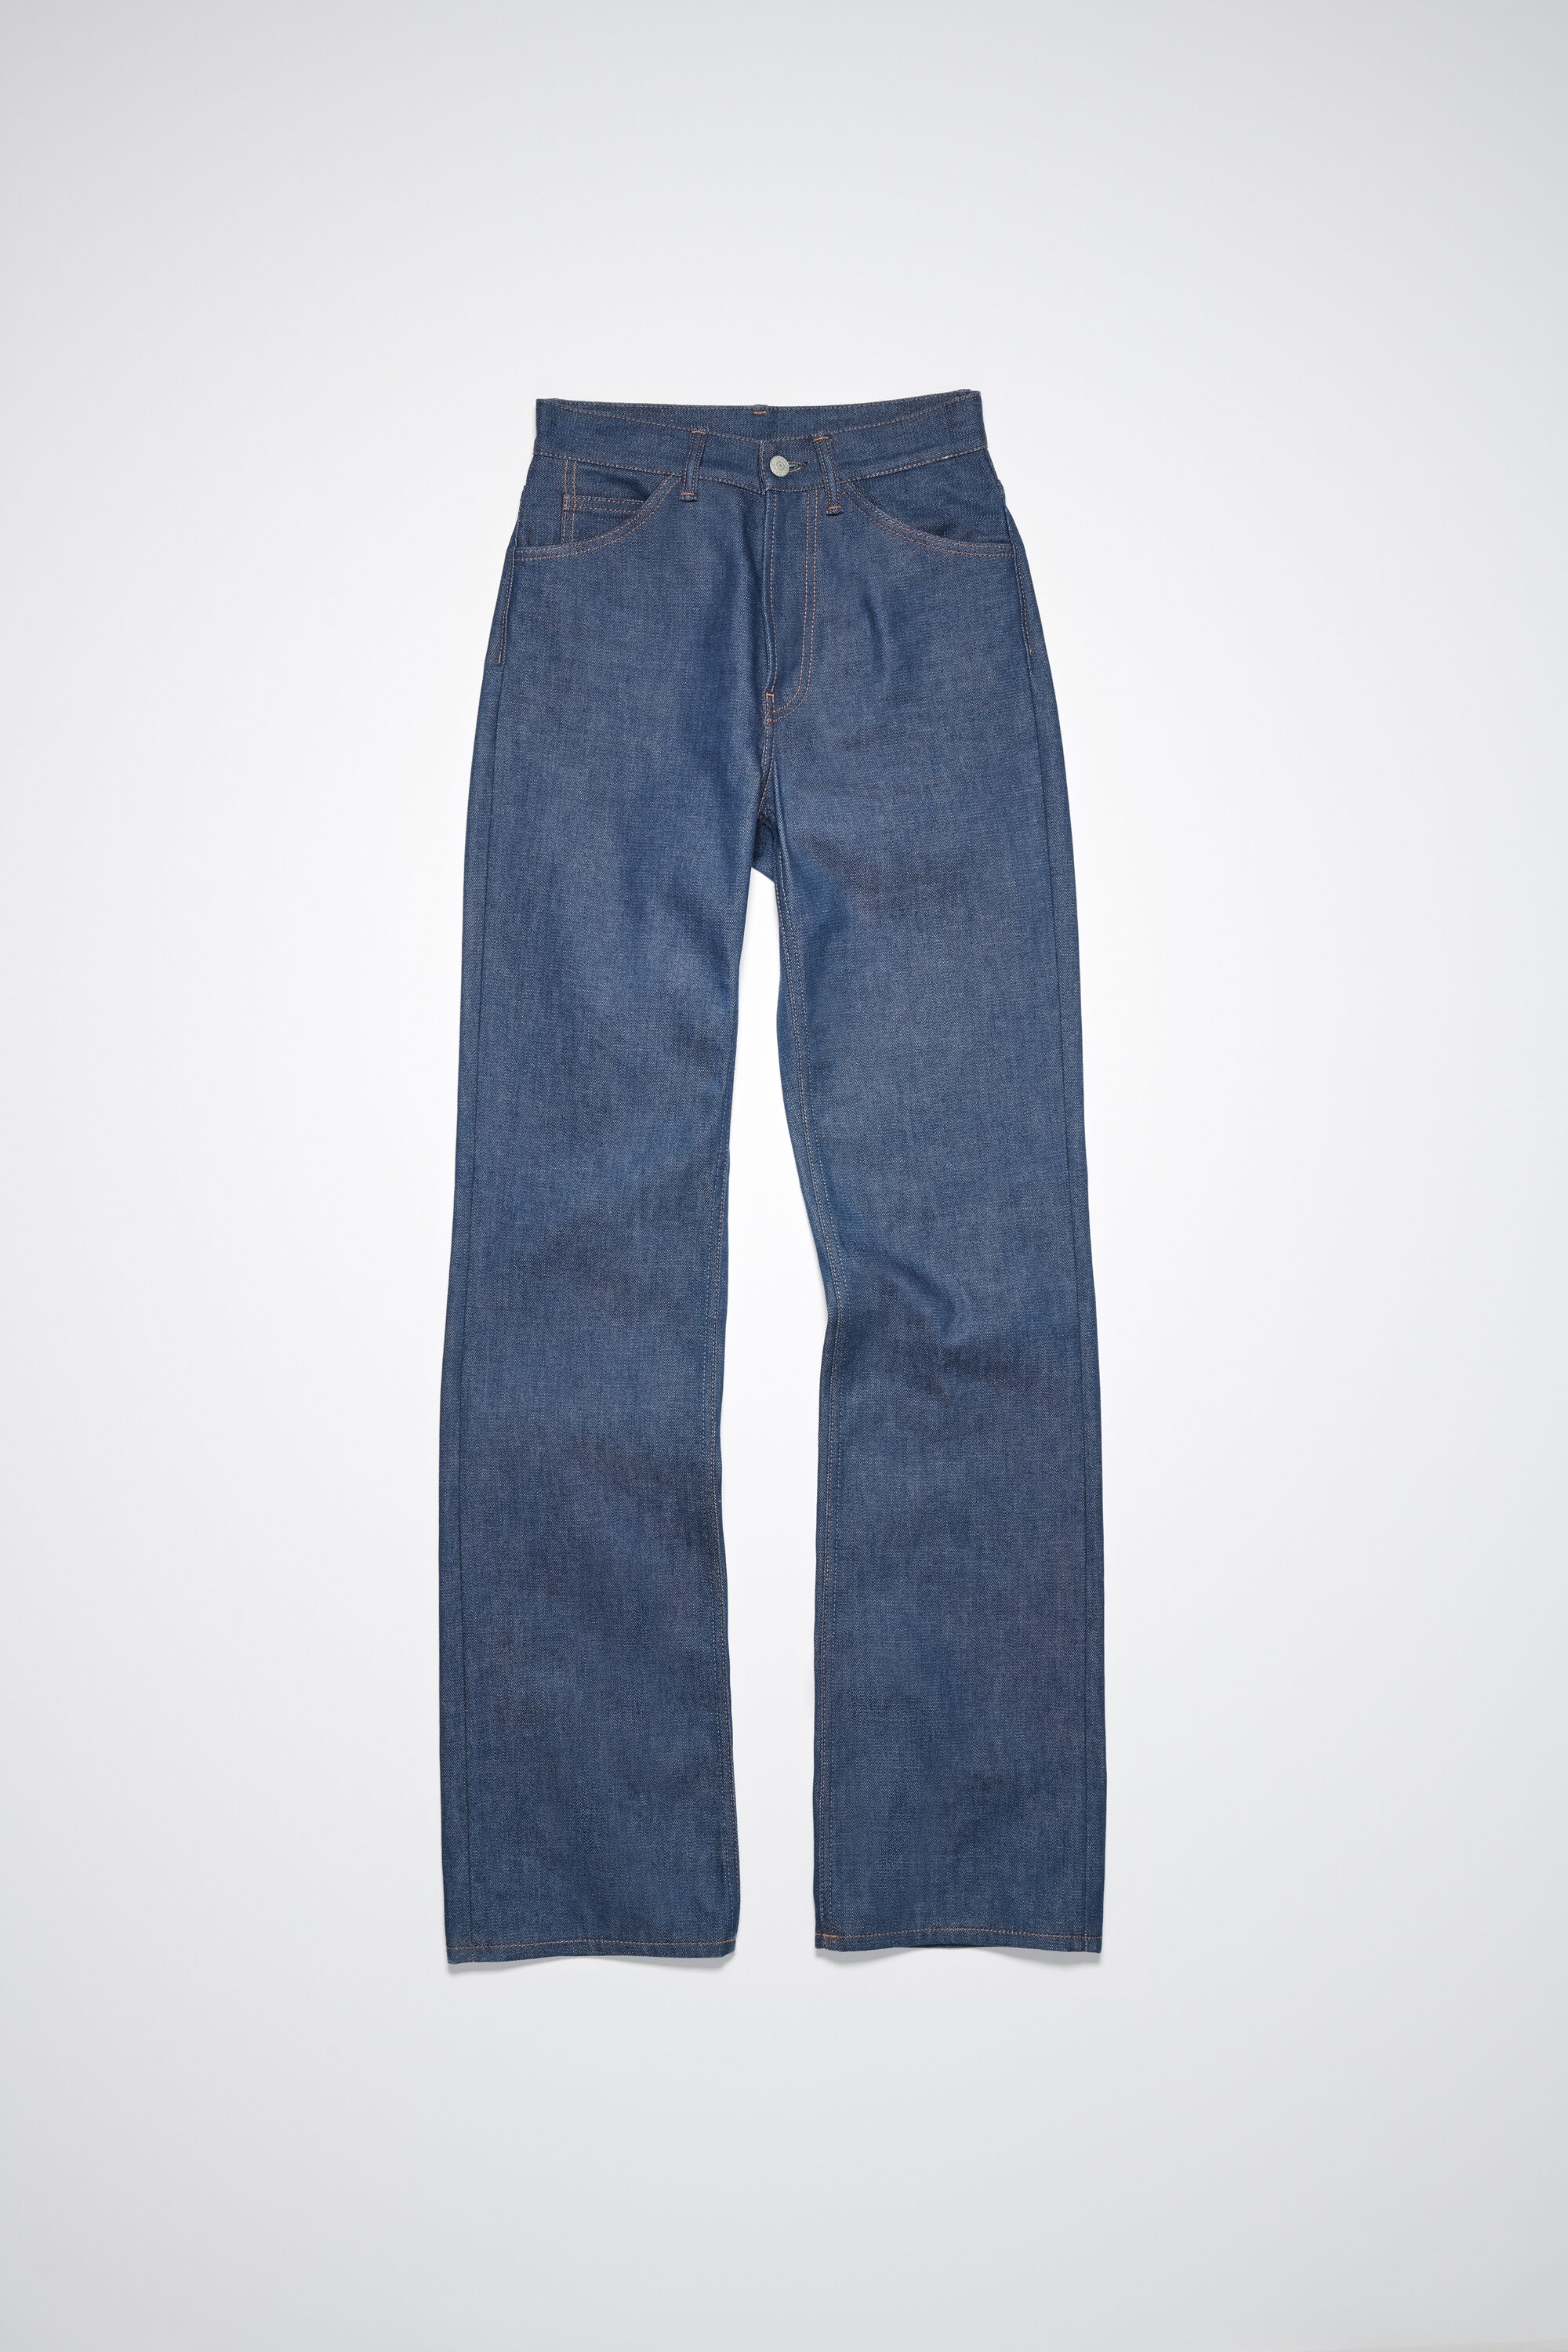 Regular fit jeans - 1977 - Indigo blue - 1